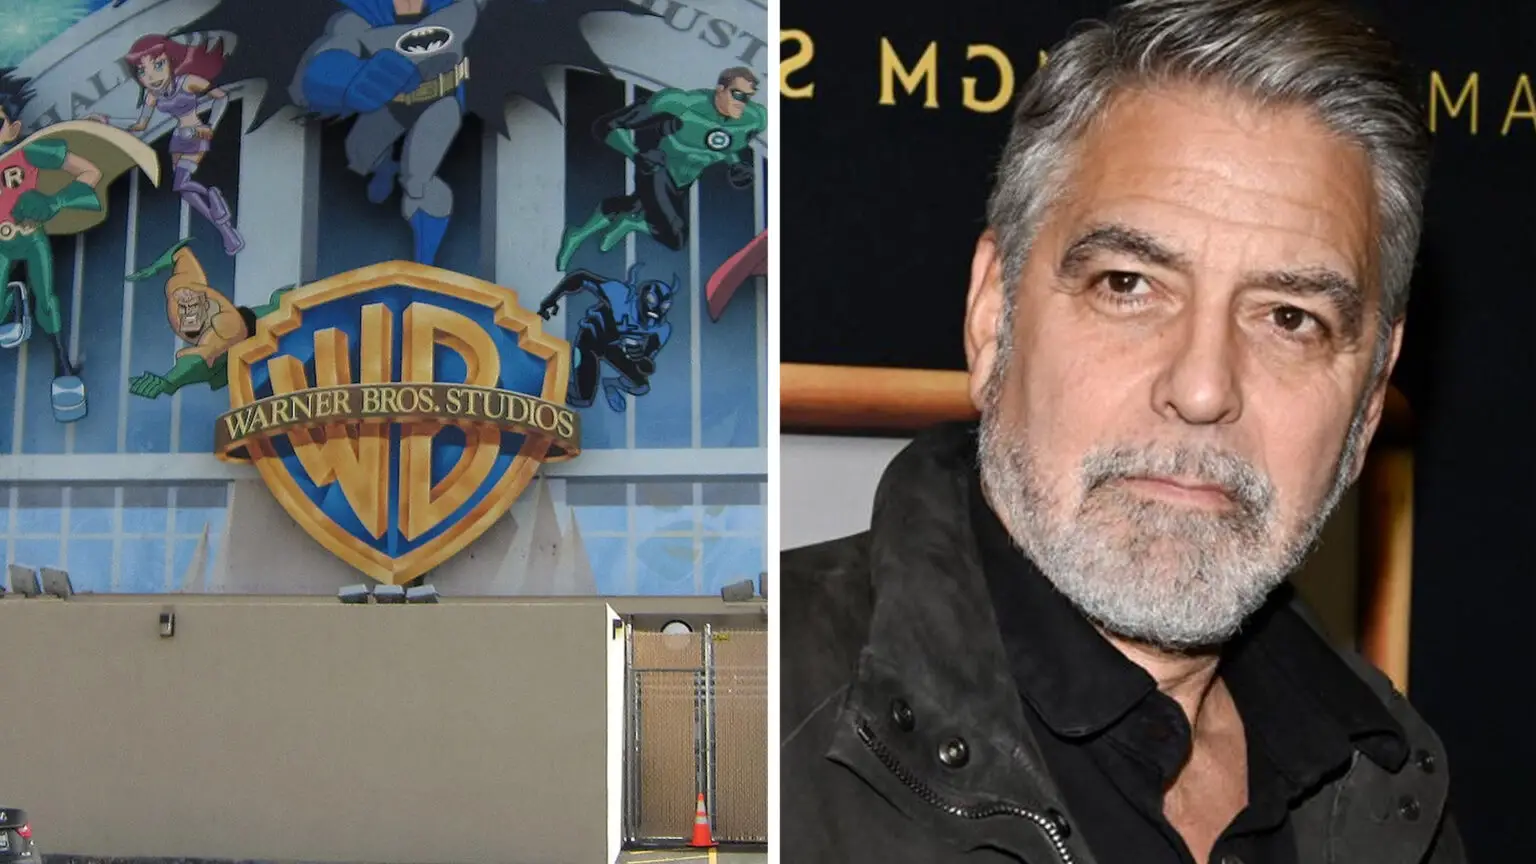 Breaking: Warner Bros Pulls Plug on $100 Million Film Starring George Clooney Due to “Woke” Image, “Not A Good Person”